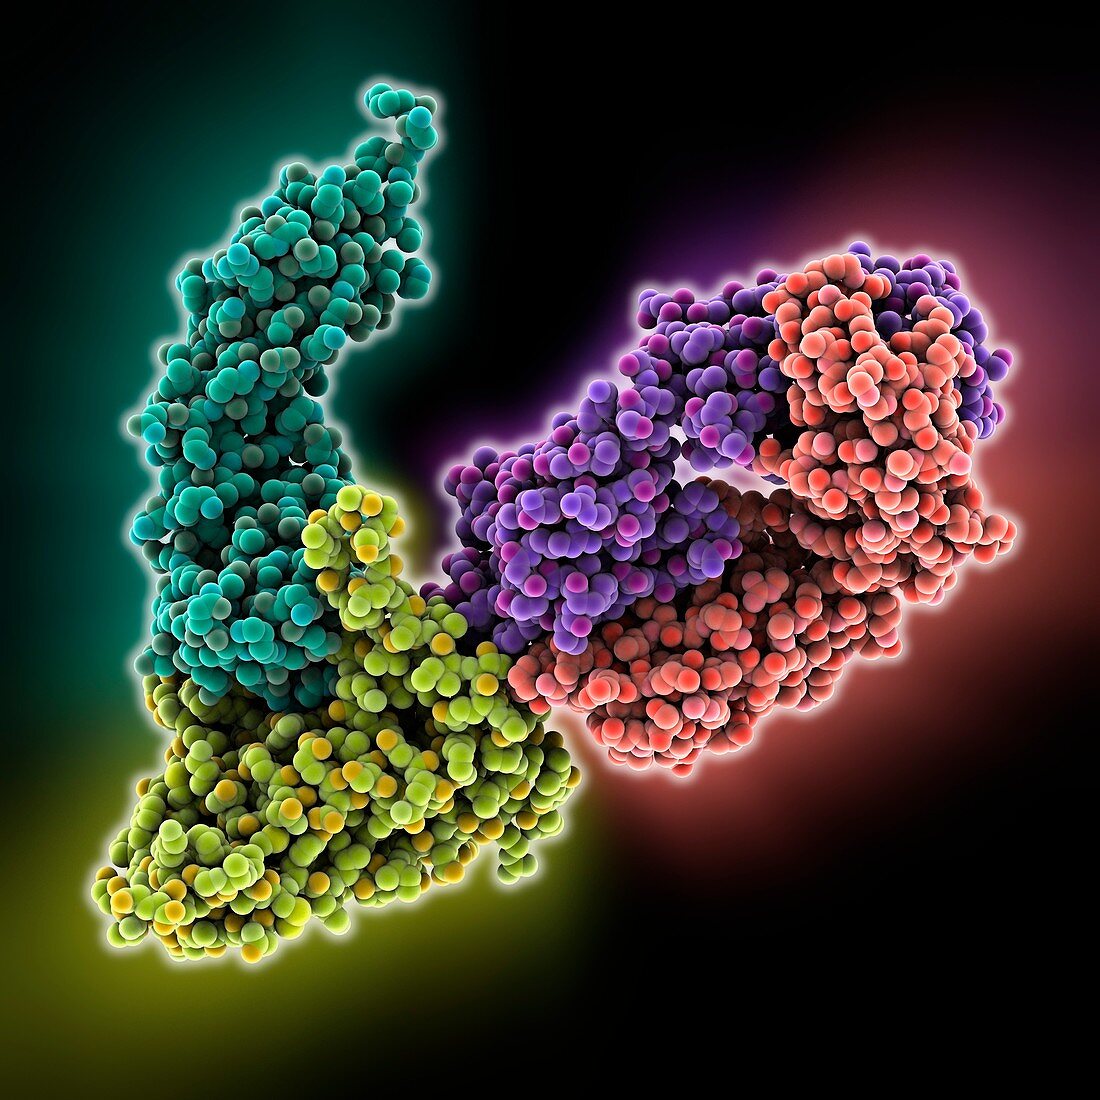 HIV antibody therapy,molecular model